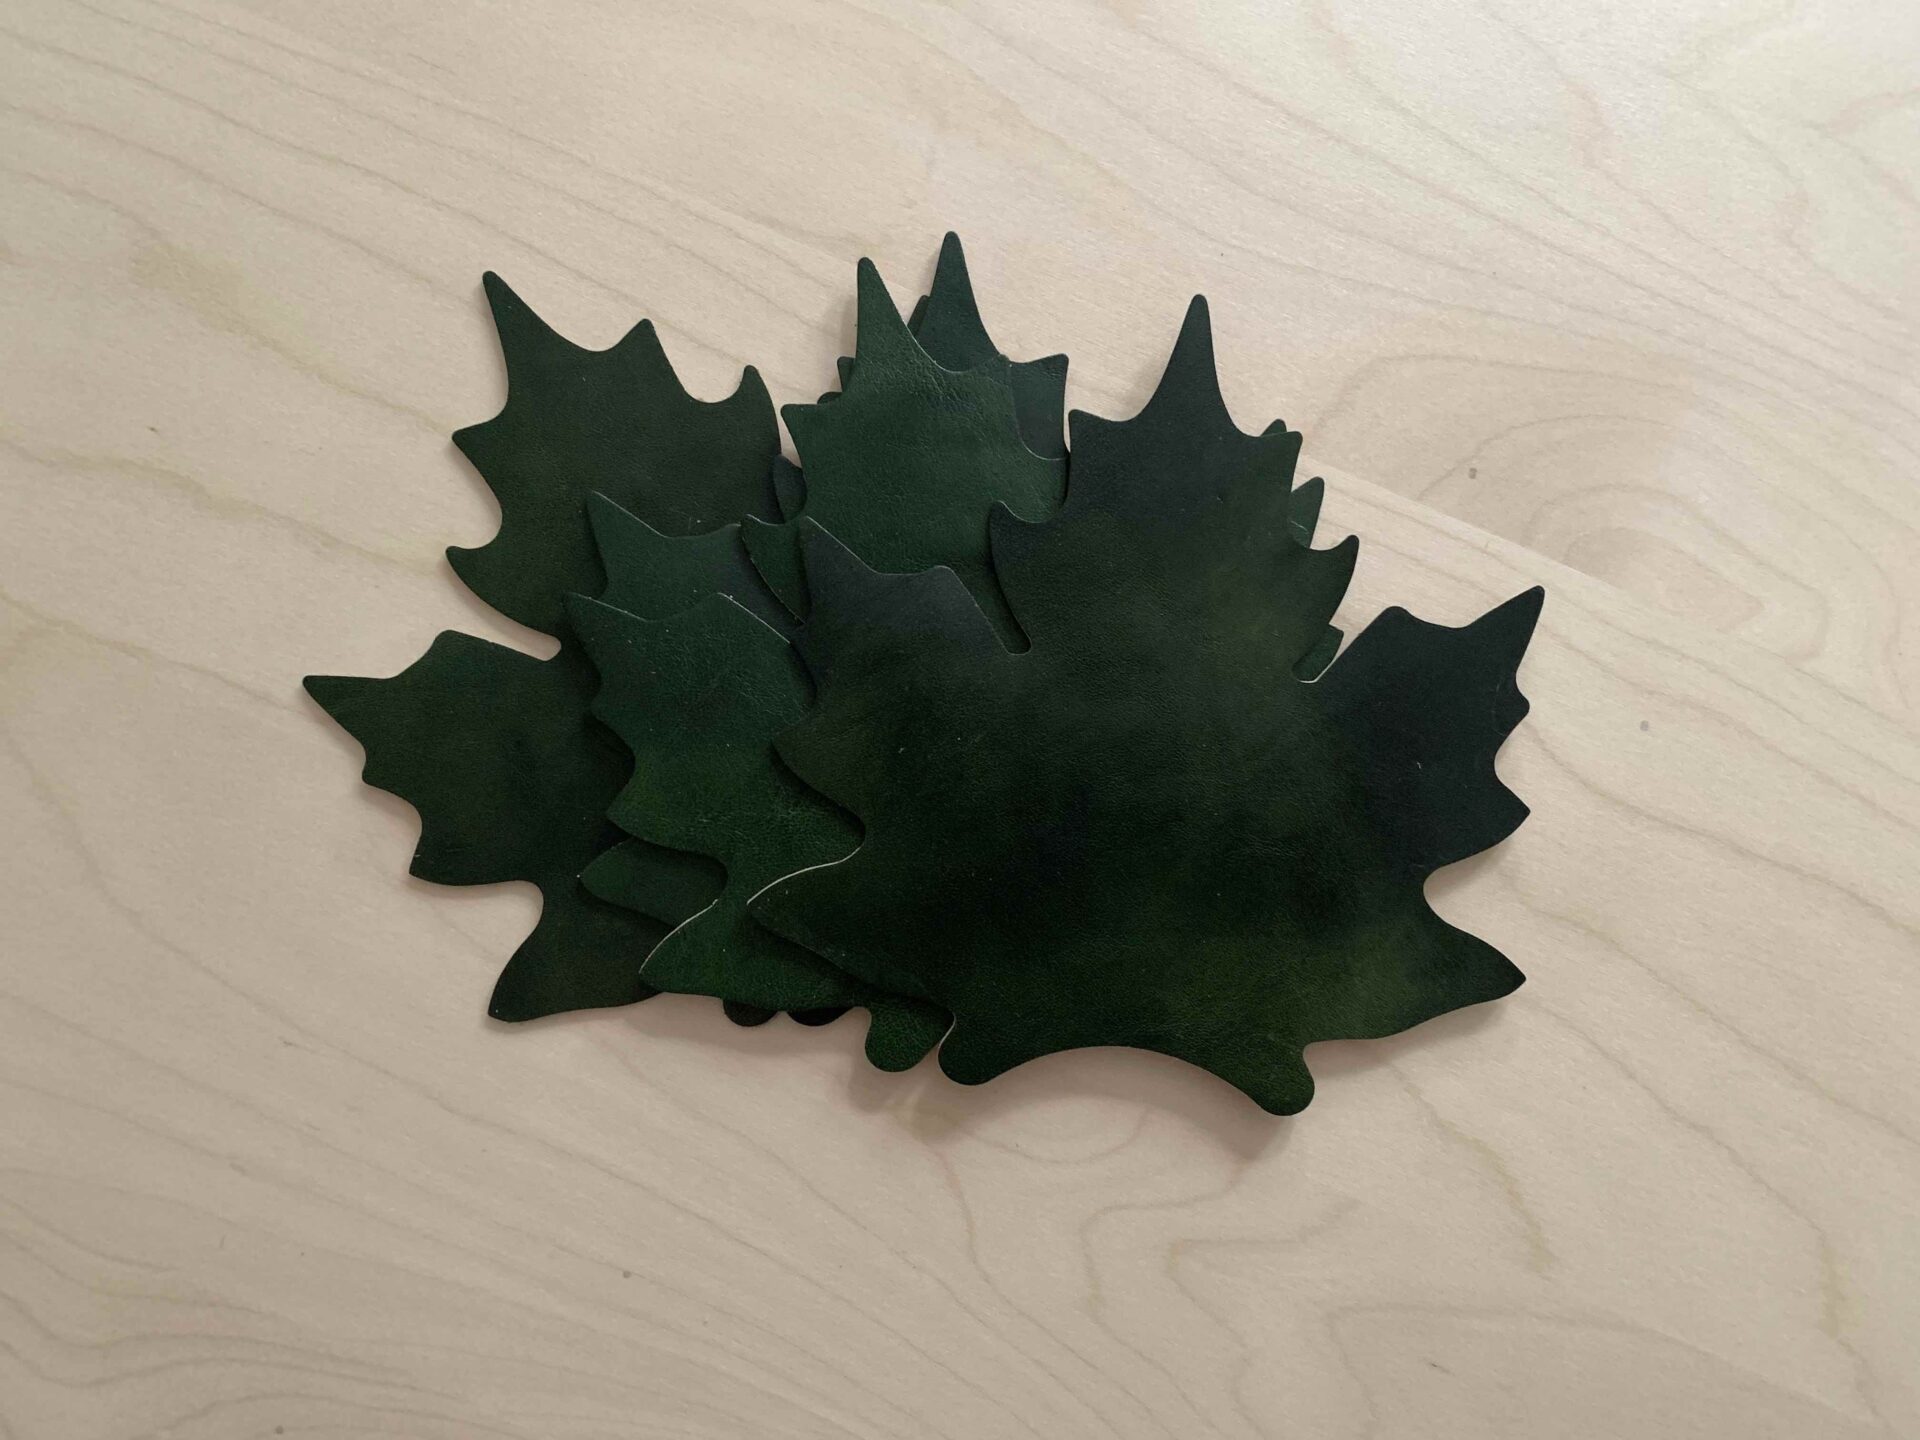 ‘Set of 4 leather coasters-leaves’